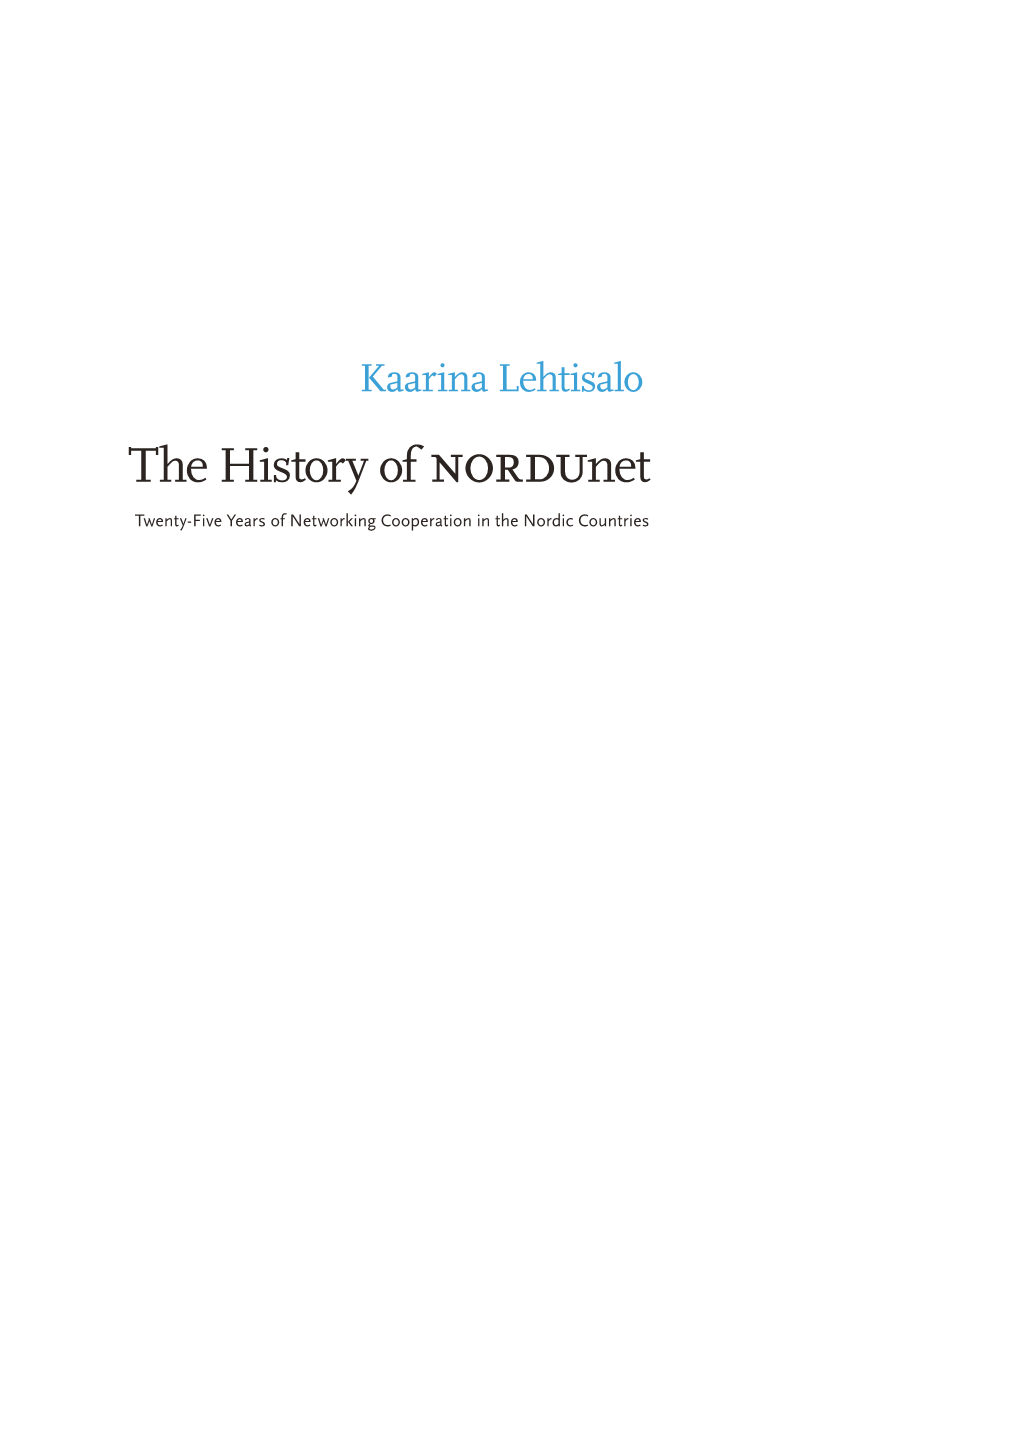 The History of Nordunet Twenty-Five Years of Networking Cooperation in the Nordic Countries SKALAT MAÐR RÚNAR RÍSTA NEMA RÁÐA VEL KUNNI